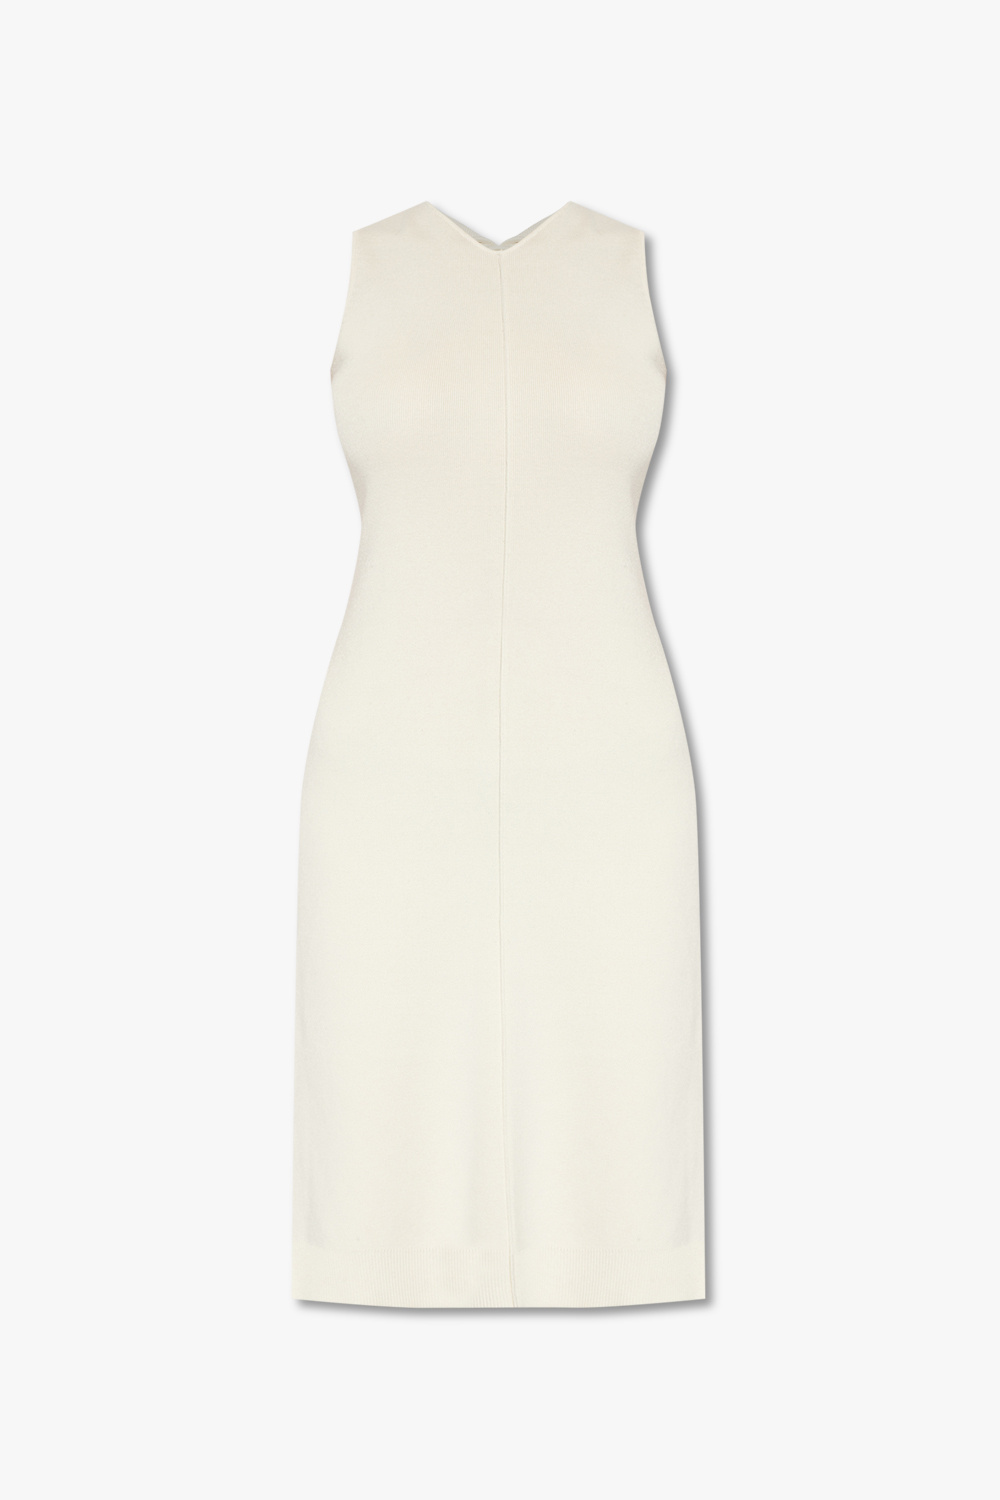 Proenza Schouler White Label Sleeveless dress